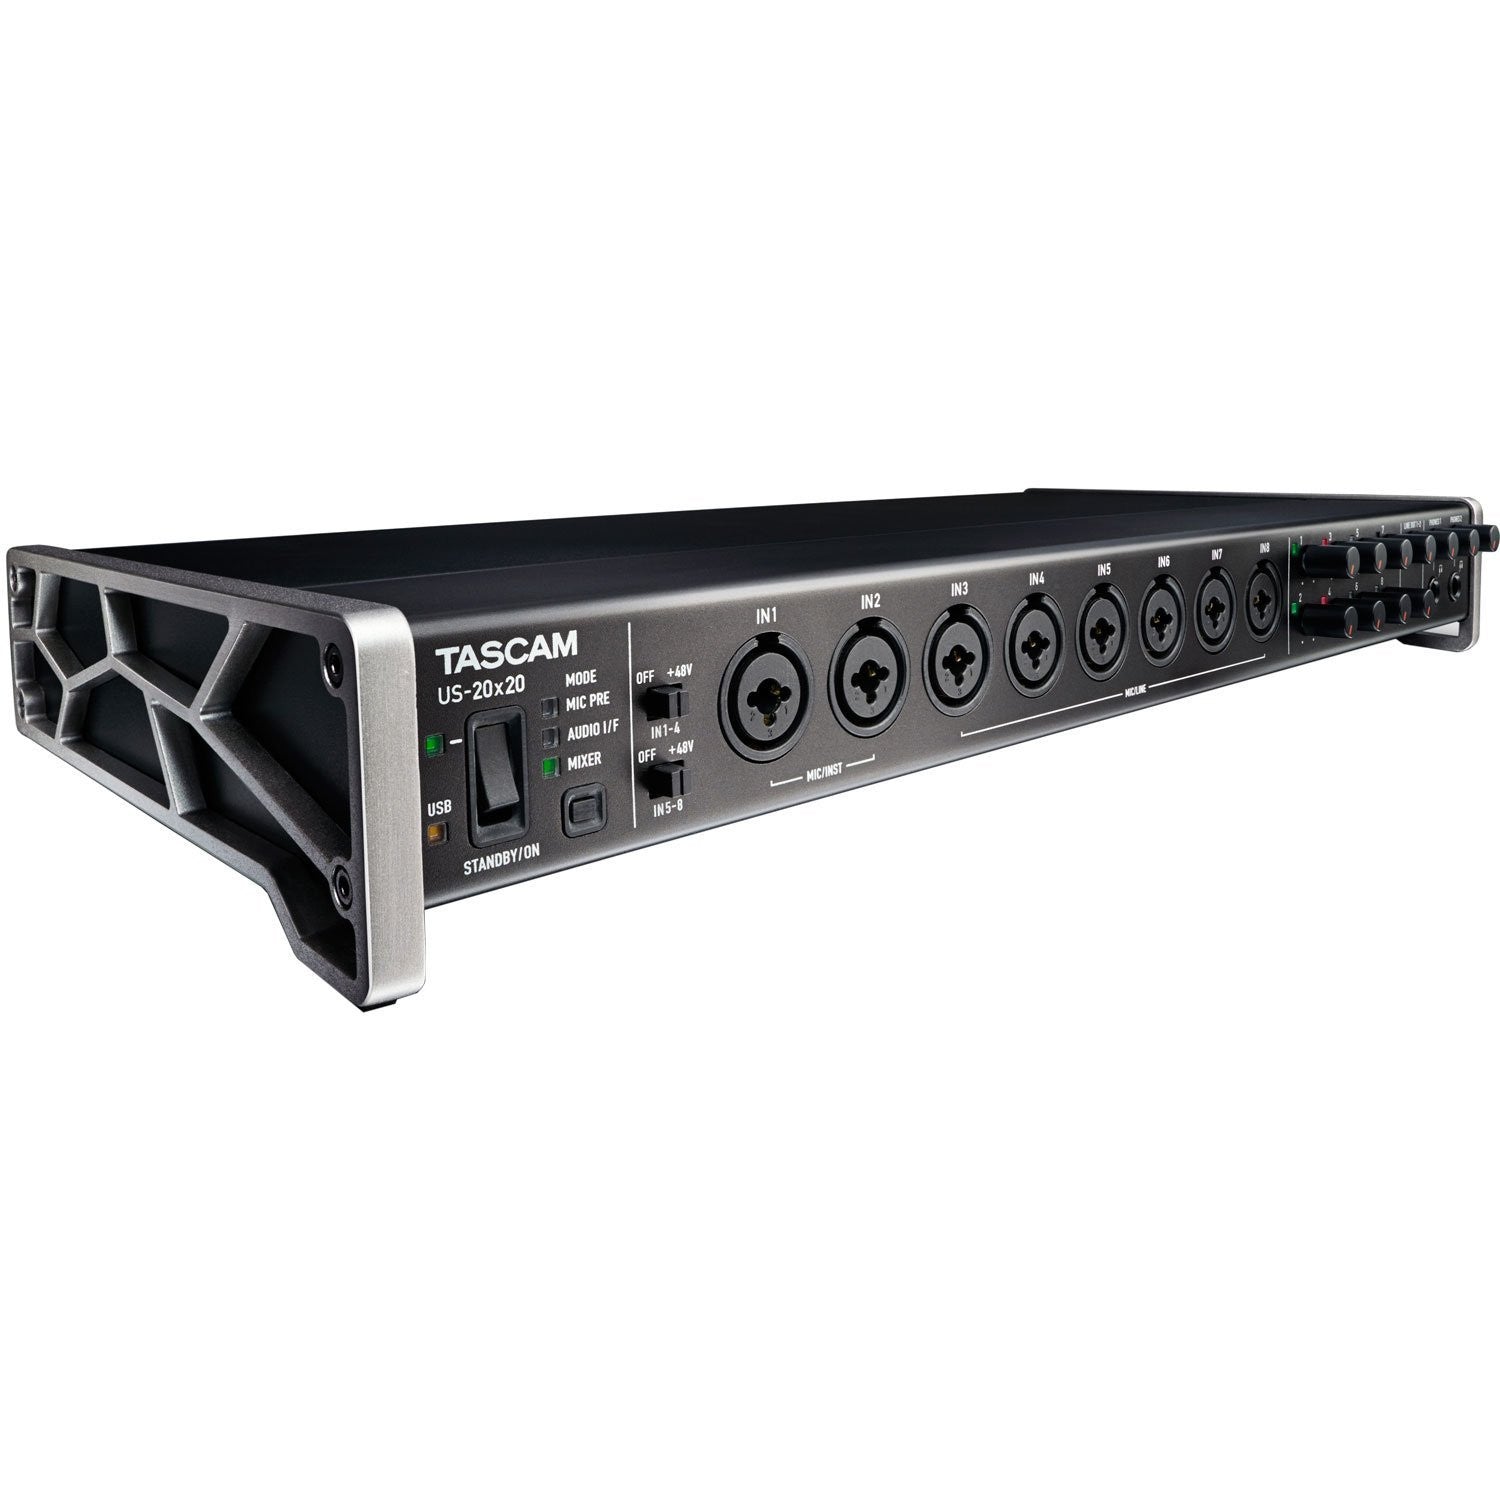 US-20x20 Audio MIDI Interface with Mic Pre/Mixer